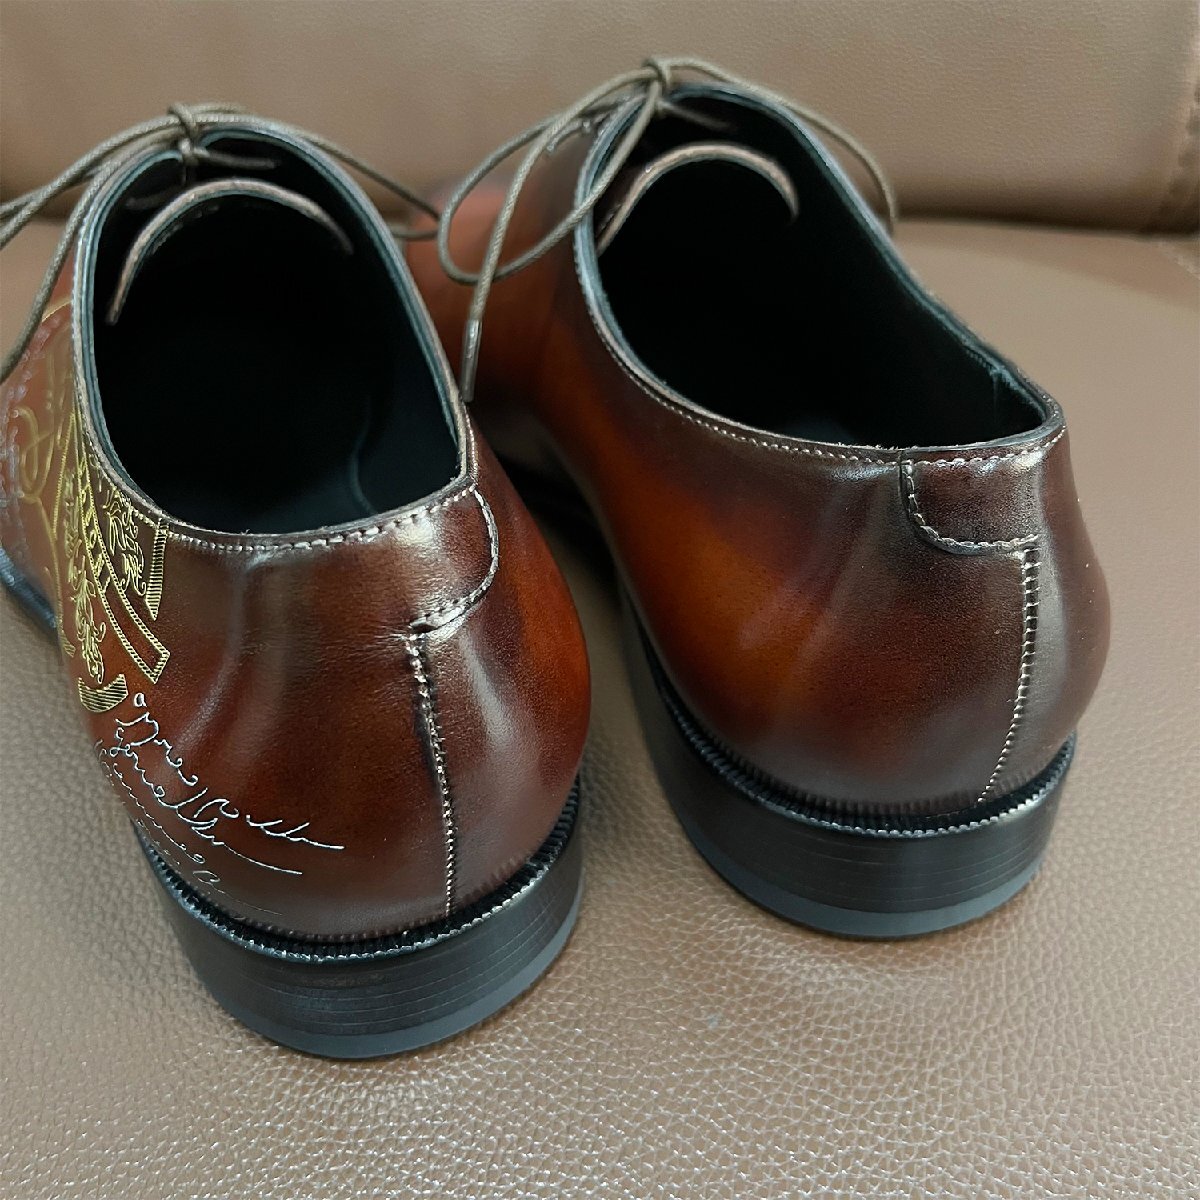  popular EU made regular price 28 ten thousand special order limited goods *UABONI* business shoes *yuaboni* high class hand made handmade hand . original leather formal gentleman 25.